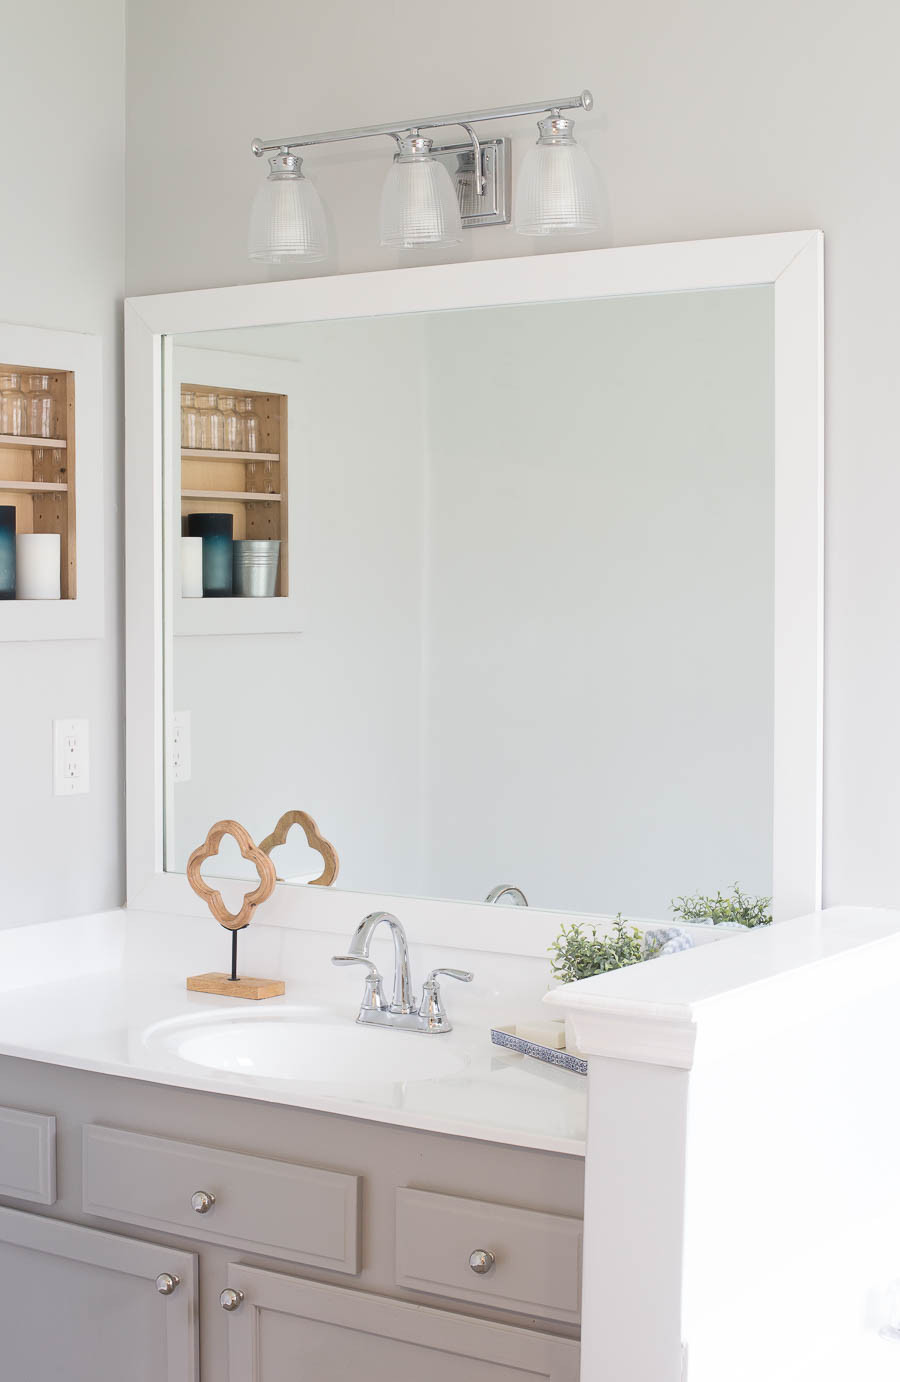 Best ideas about DIY Frame Bathroom Mirror
. Save or Pin How to Frame a Bathroom Mirror Easy DIY project Now.